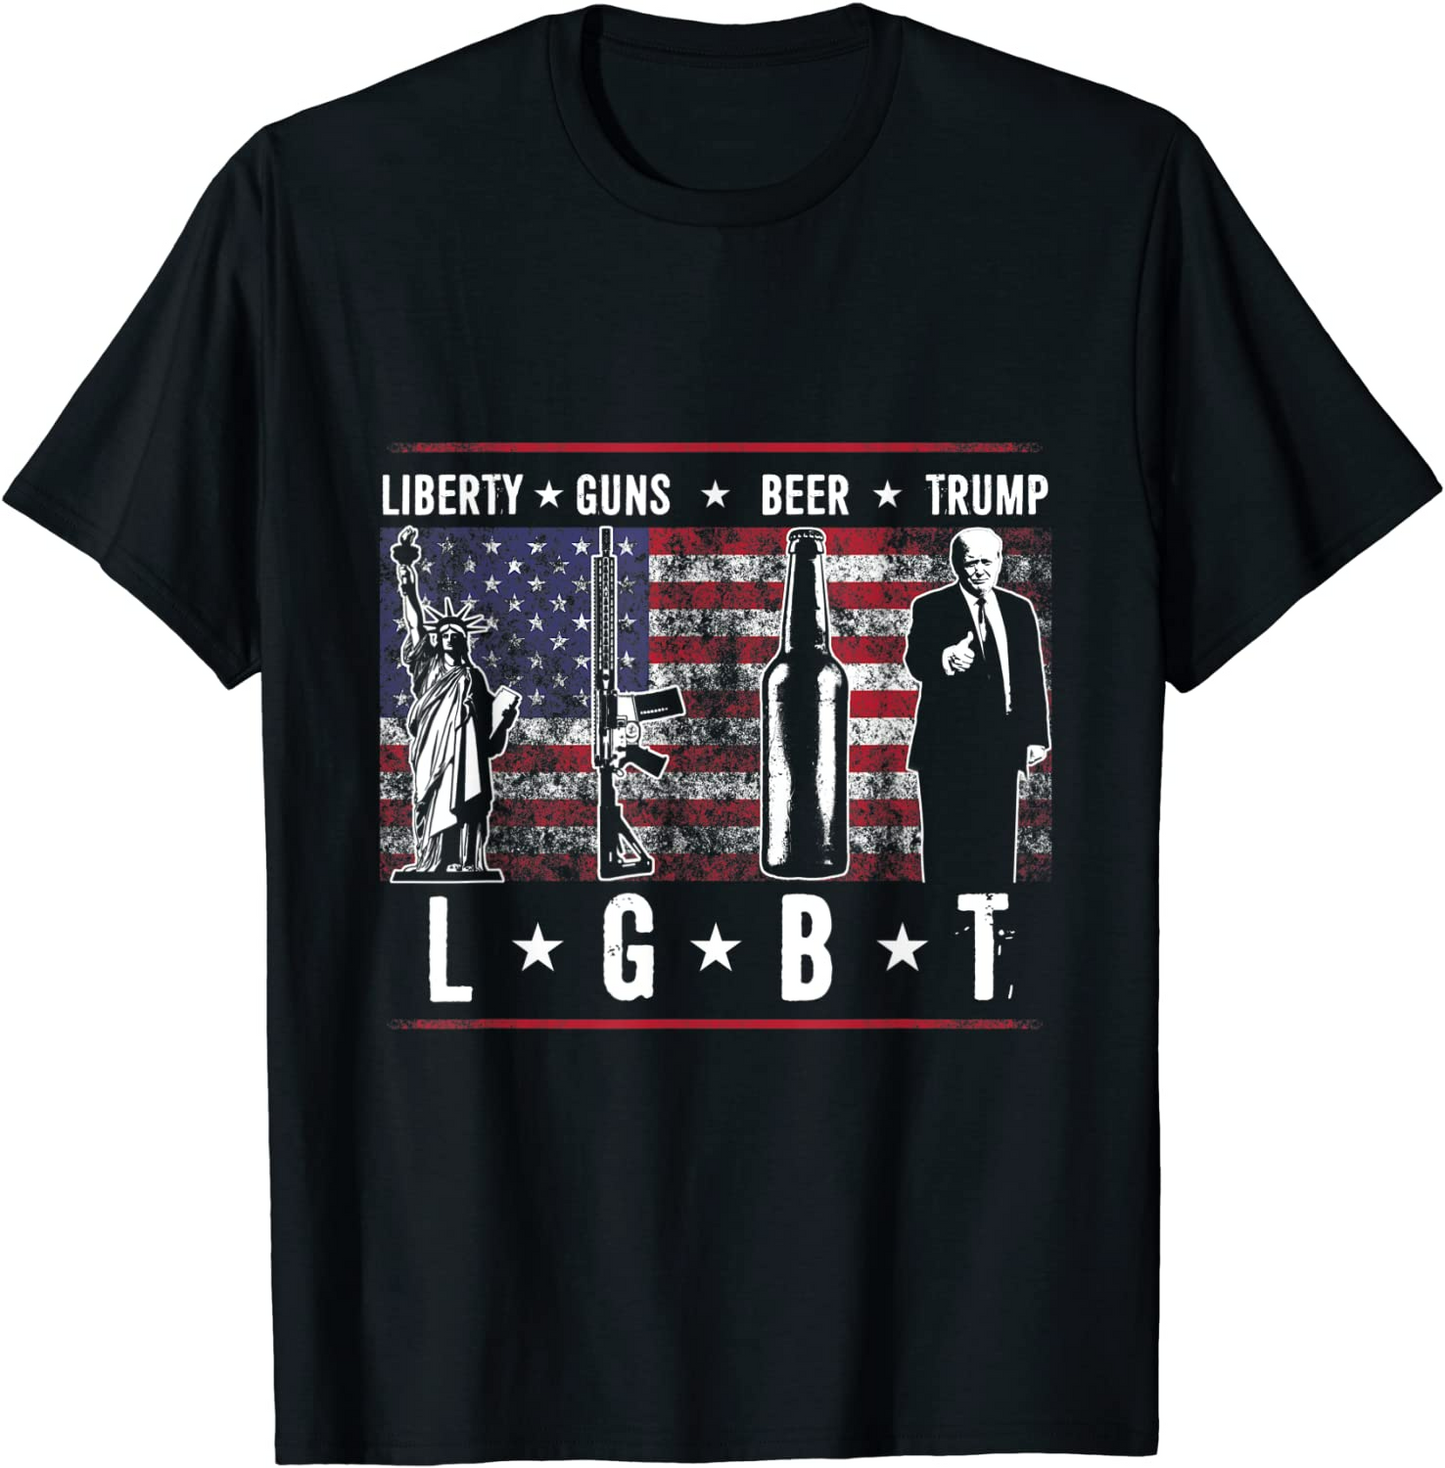 Liberty Guns Beer Trump LGBT Parody Printed T-Shirt